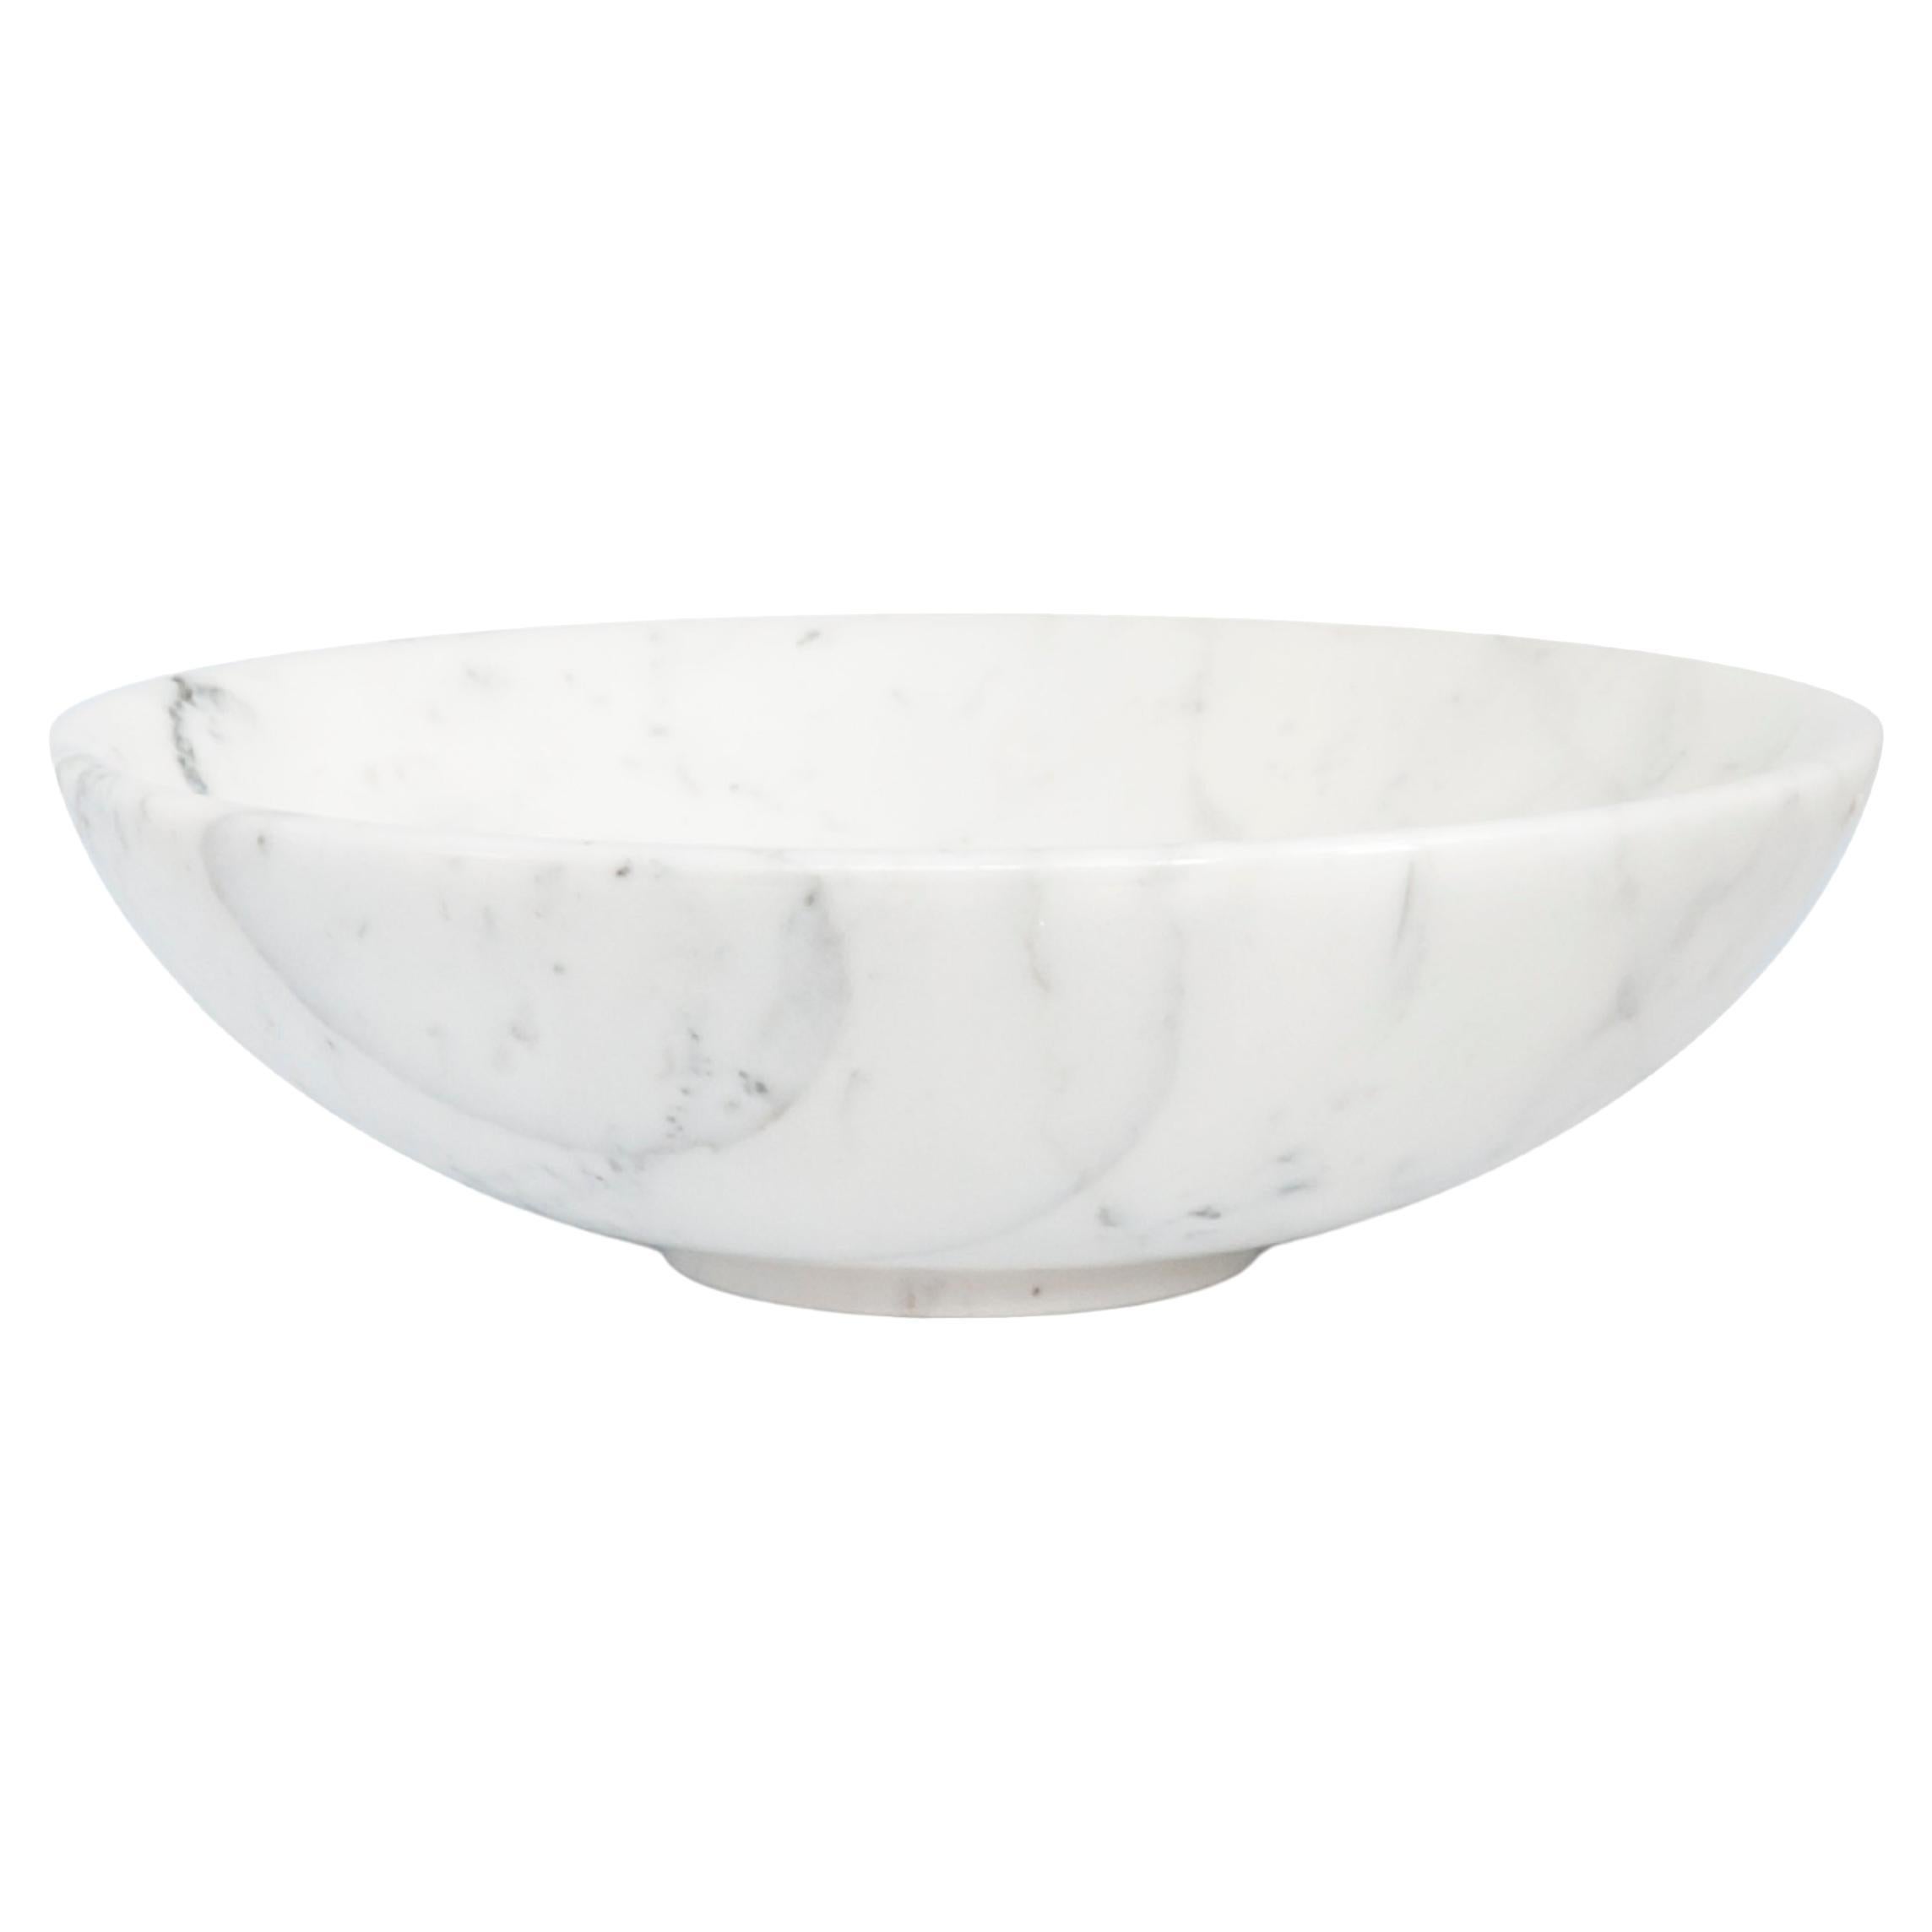 Handmade Big Fruit Bowl in White Carrara Marble